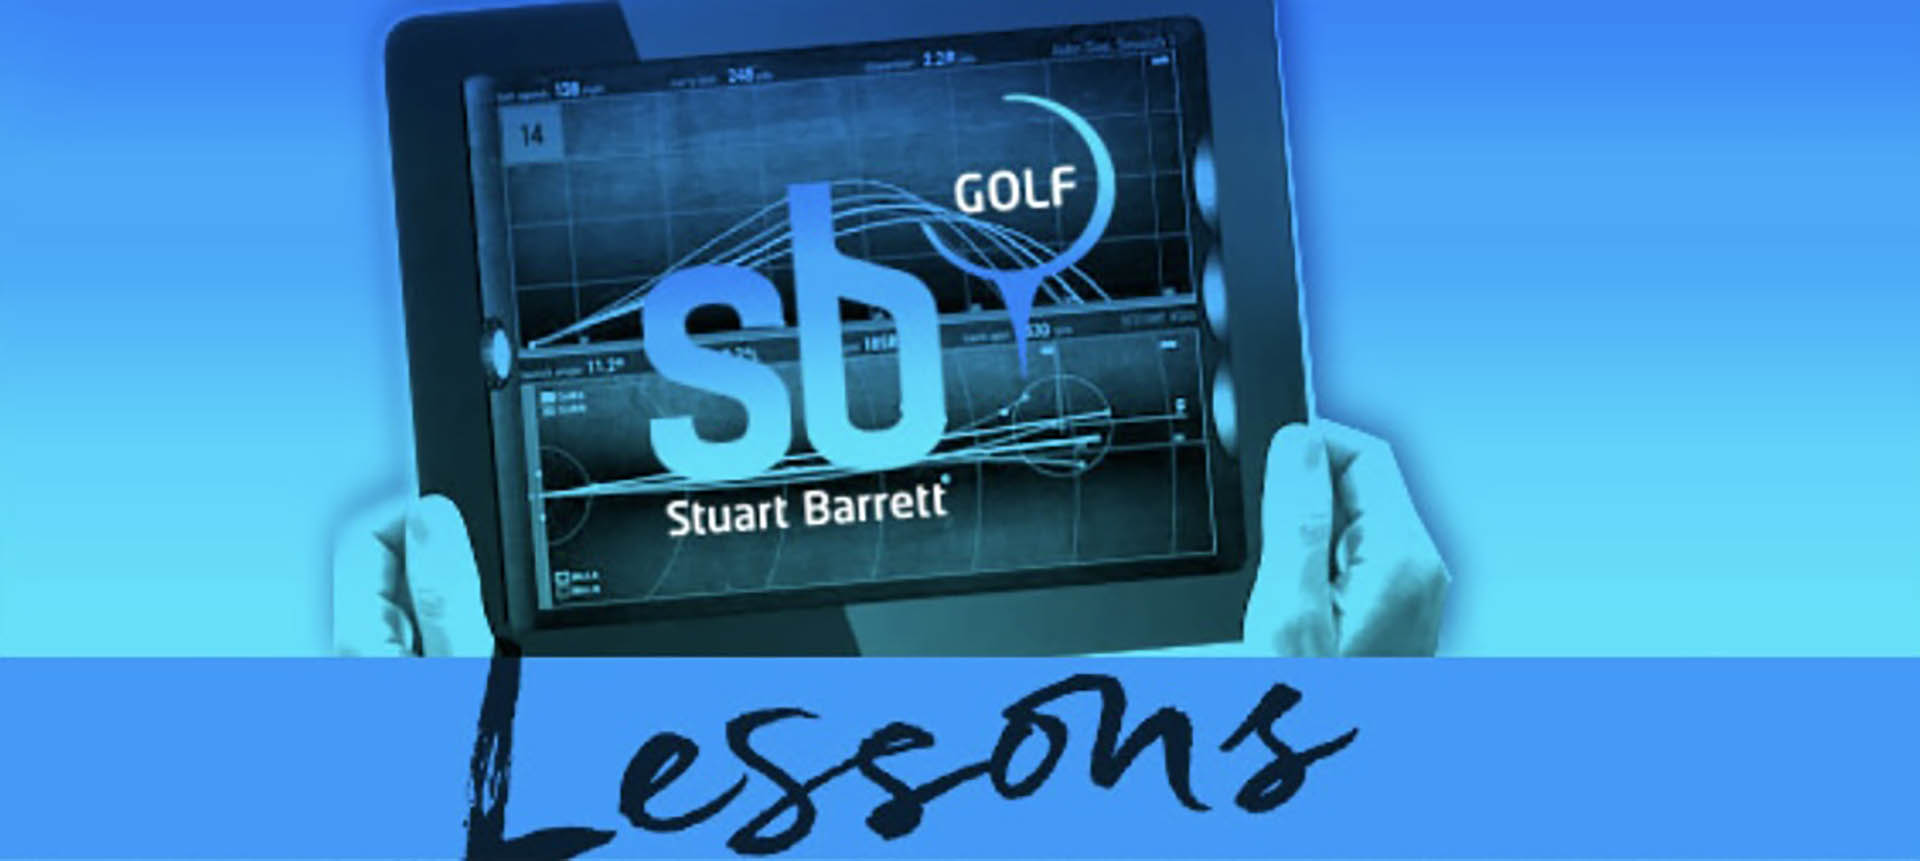 Stuart Barrett Golf Pro at the Dartmouth Hotel Golf & Spa